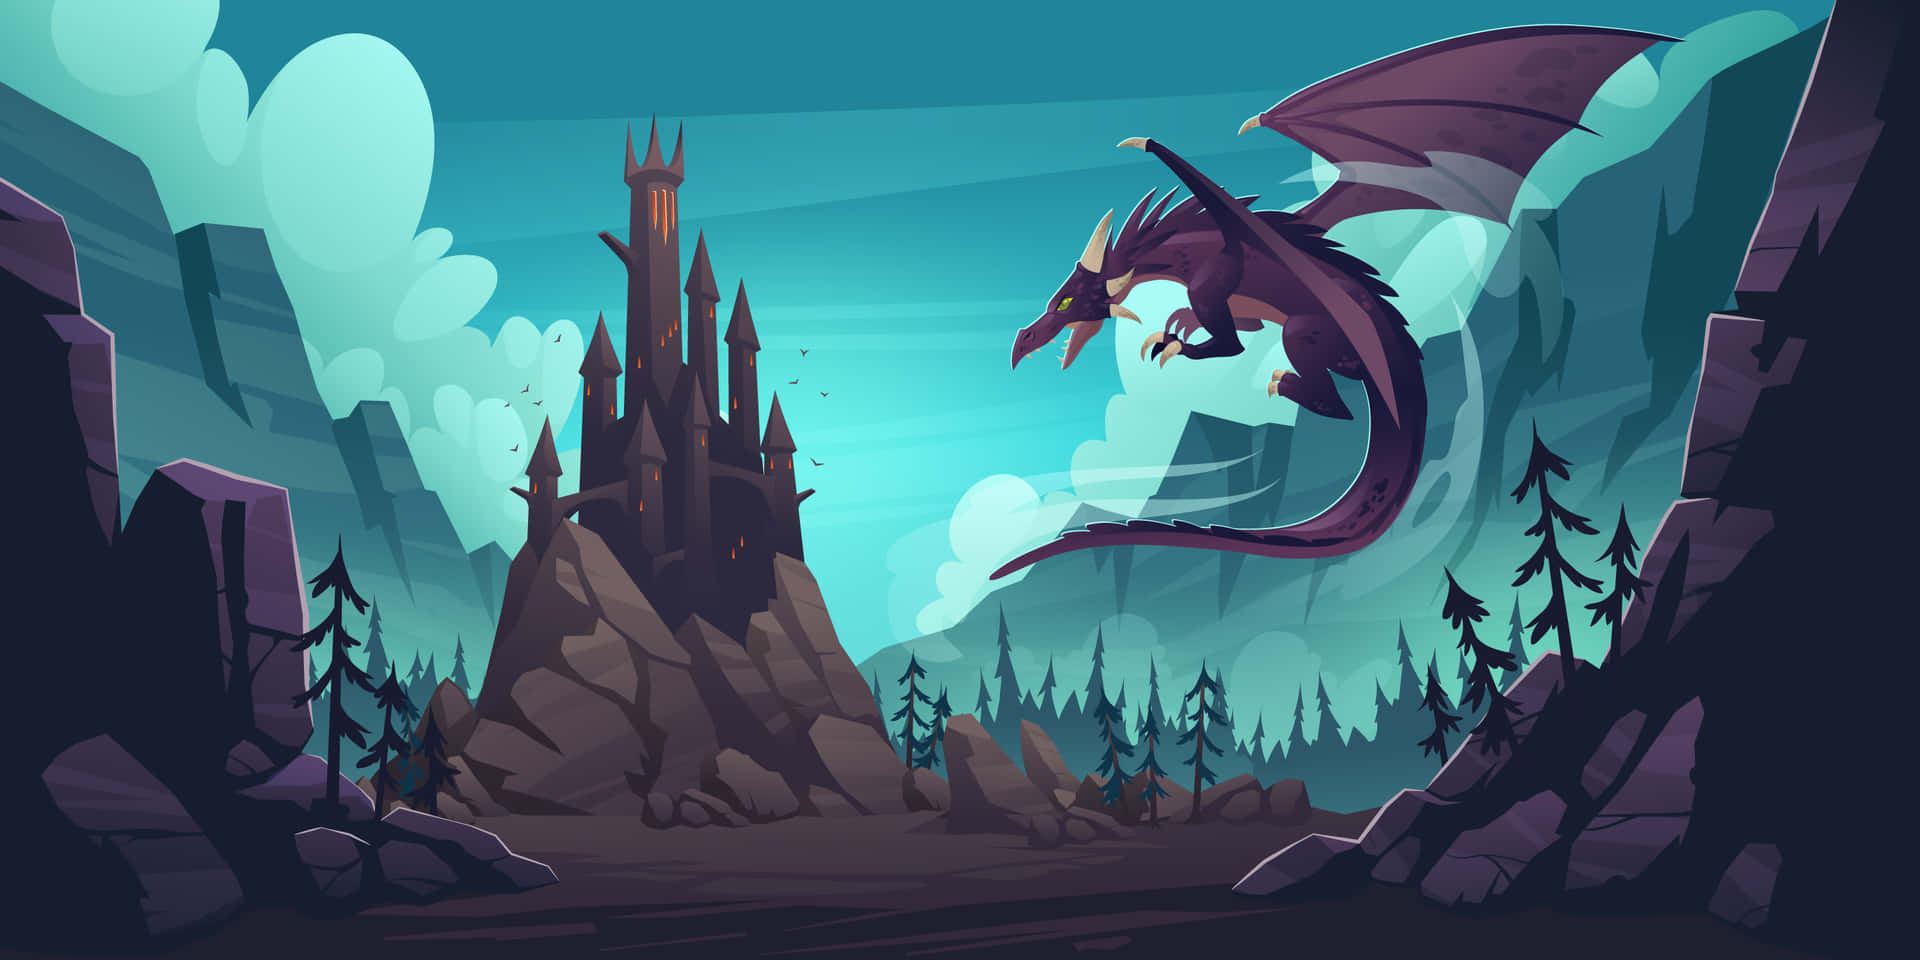 A fierce mythical dragon ready to soar through the night sky